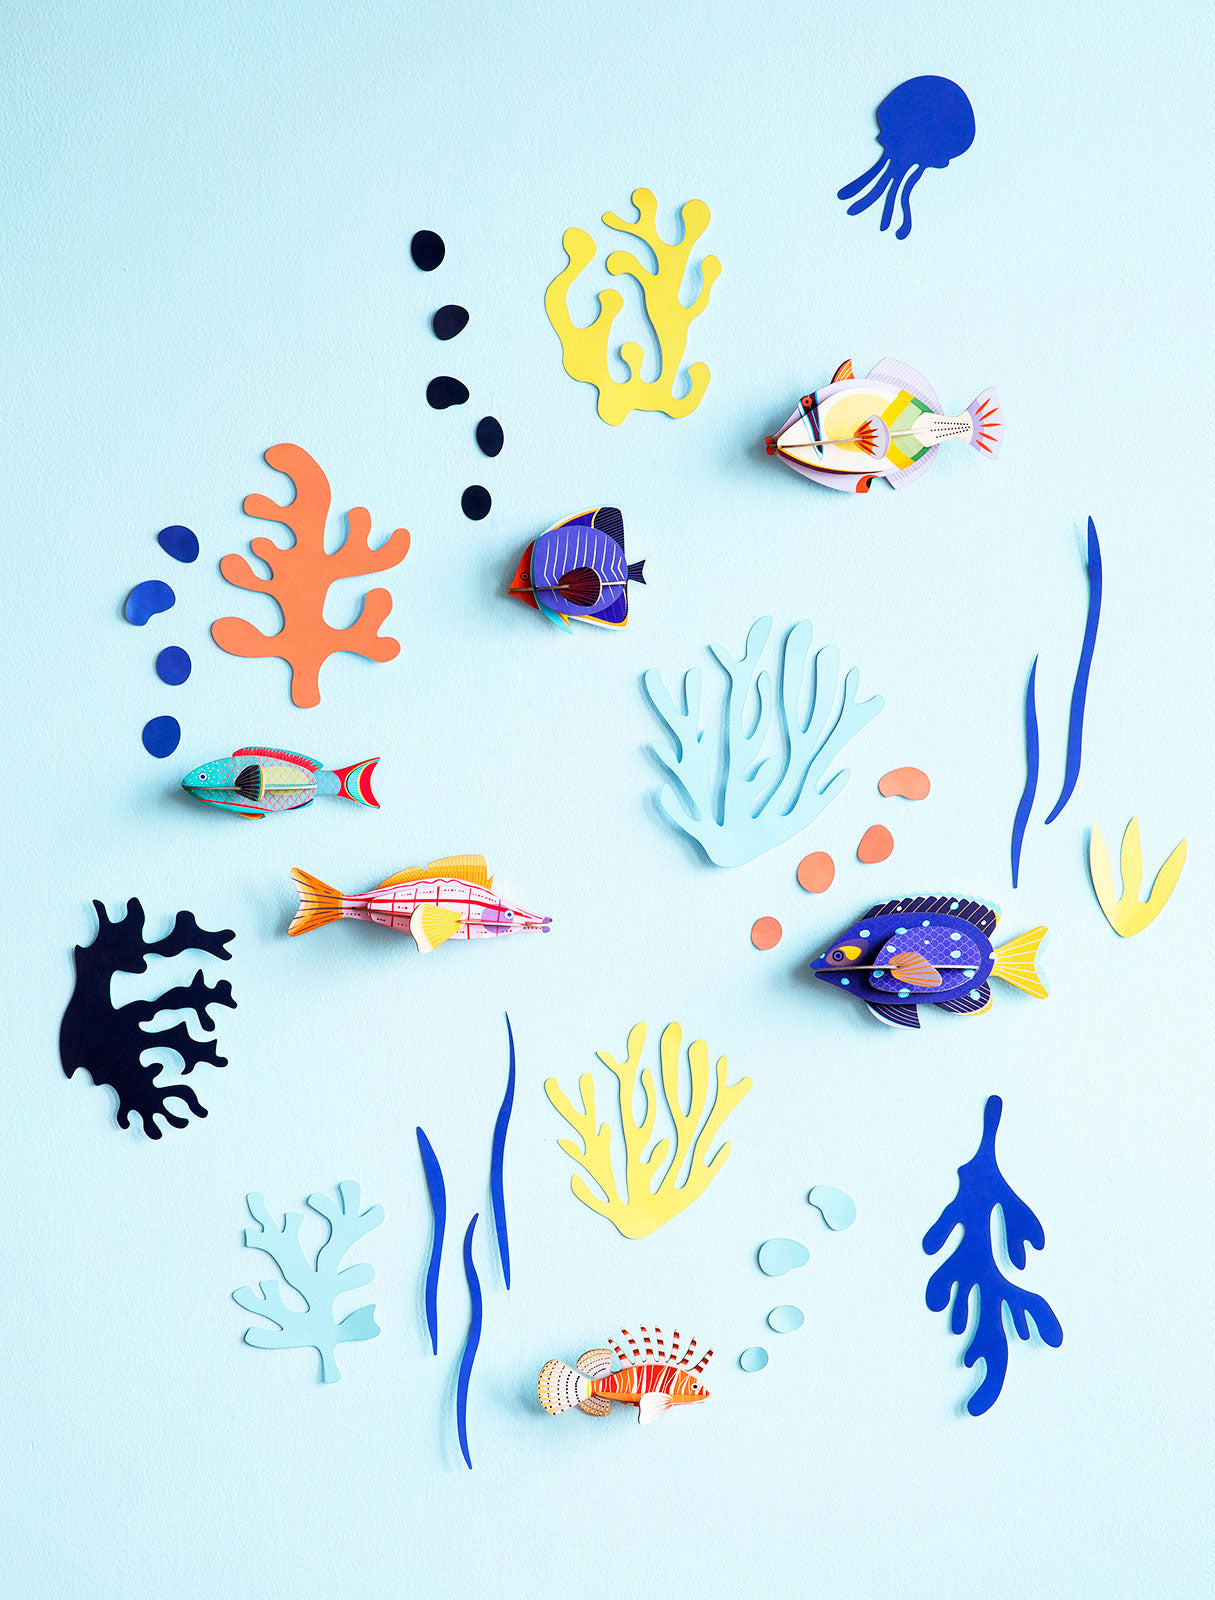 Wall of Curiosities - fish hobbyist